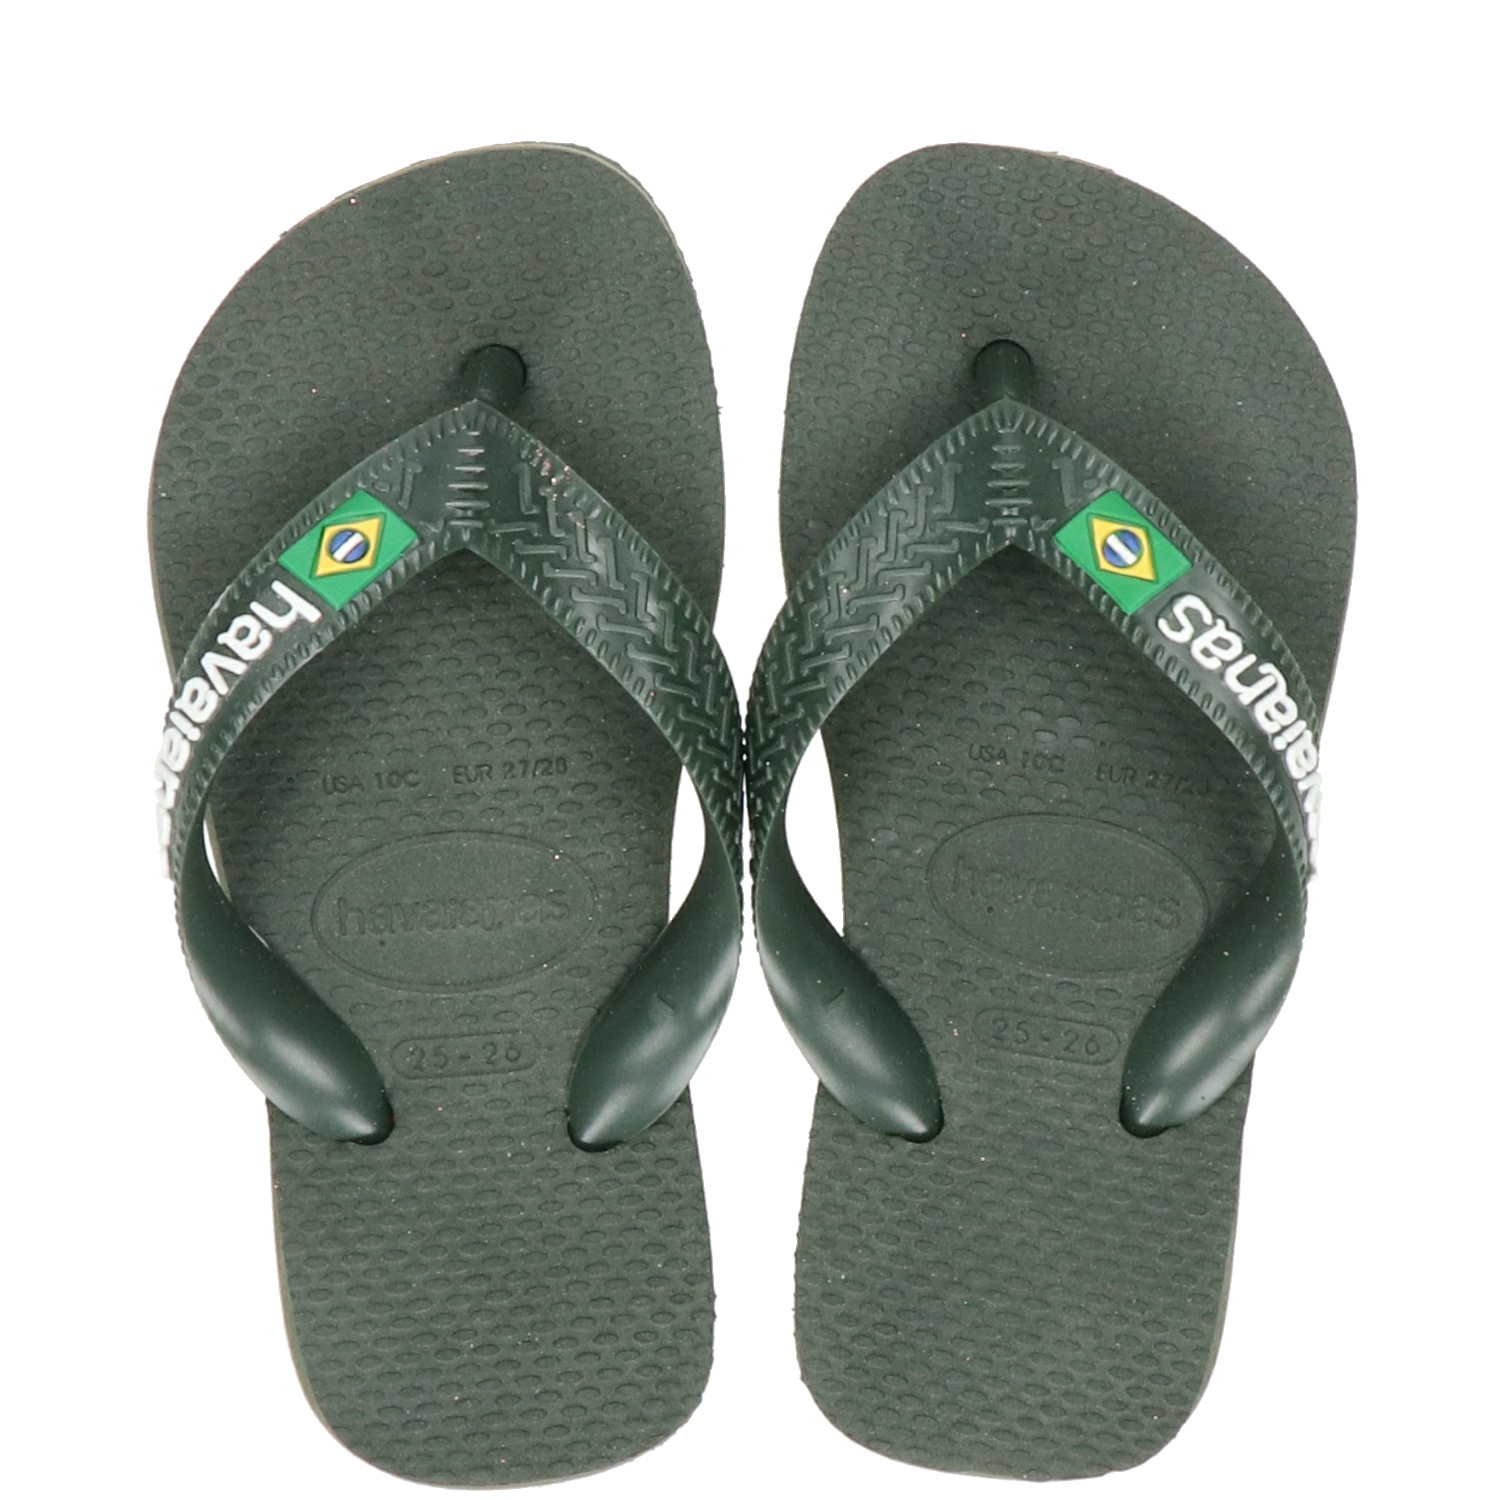 Havaianas Brasil slippers